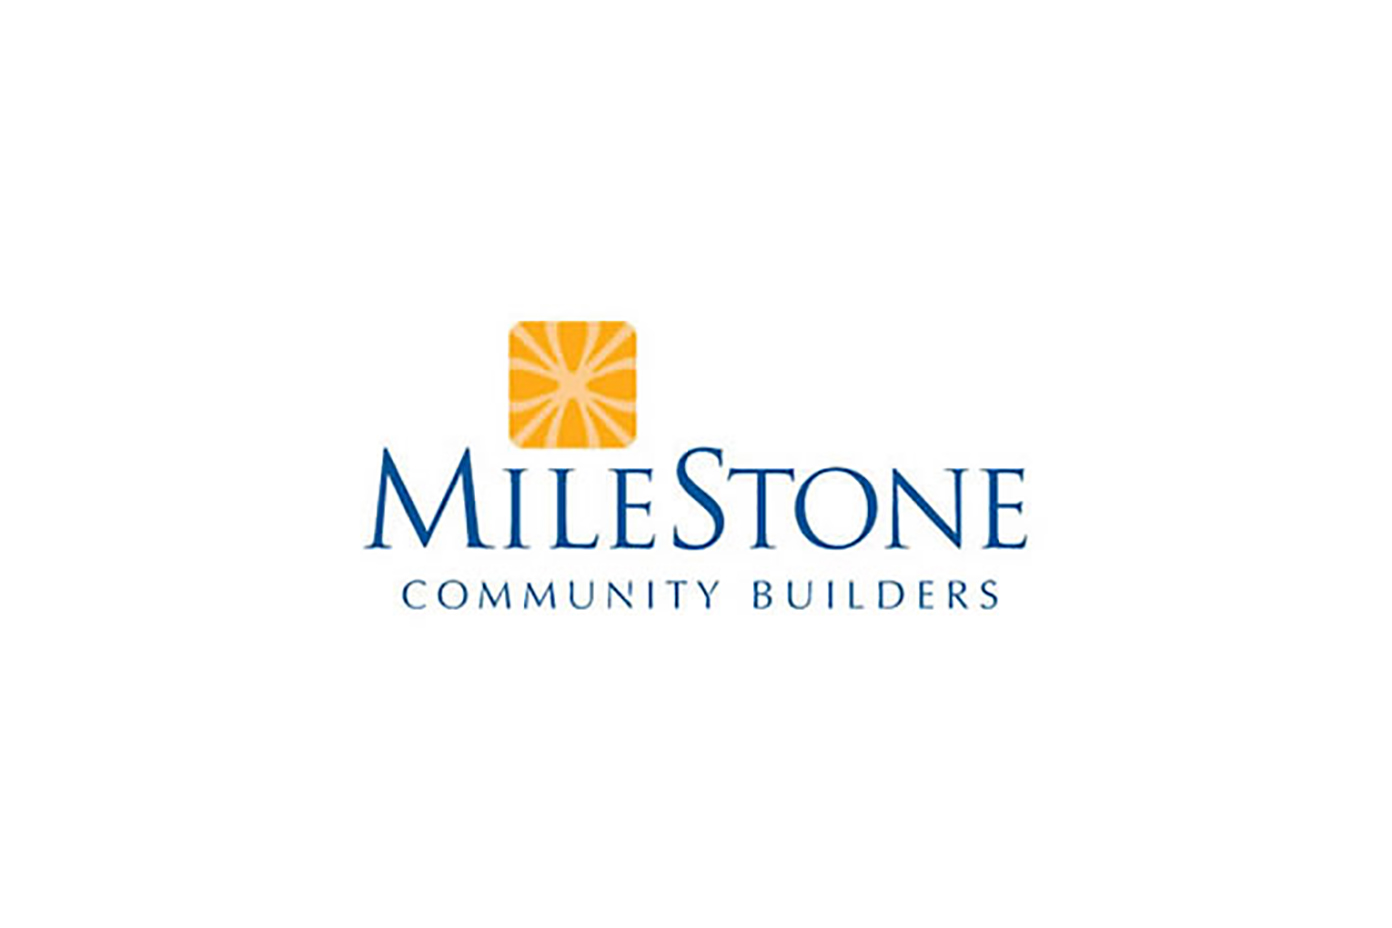 Milestone Community Builders Logo Image